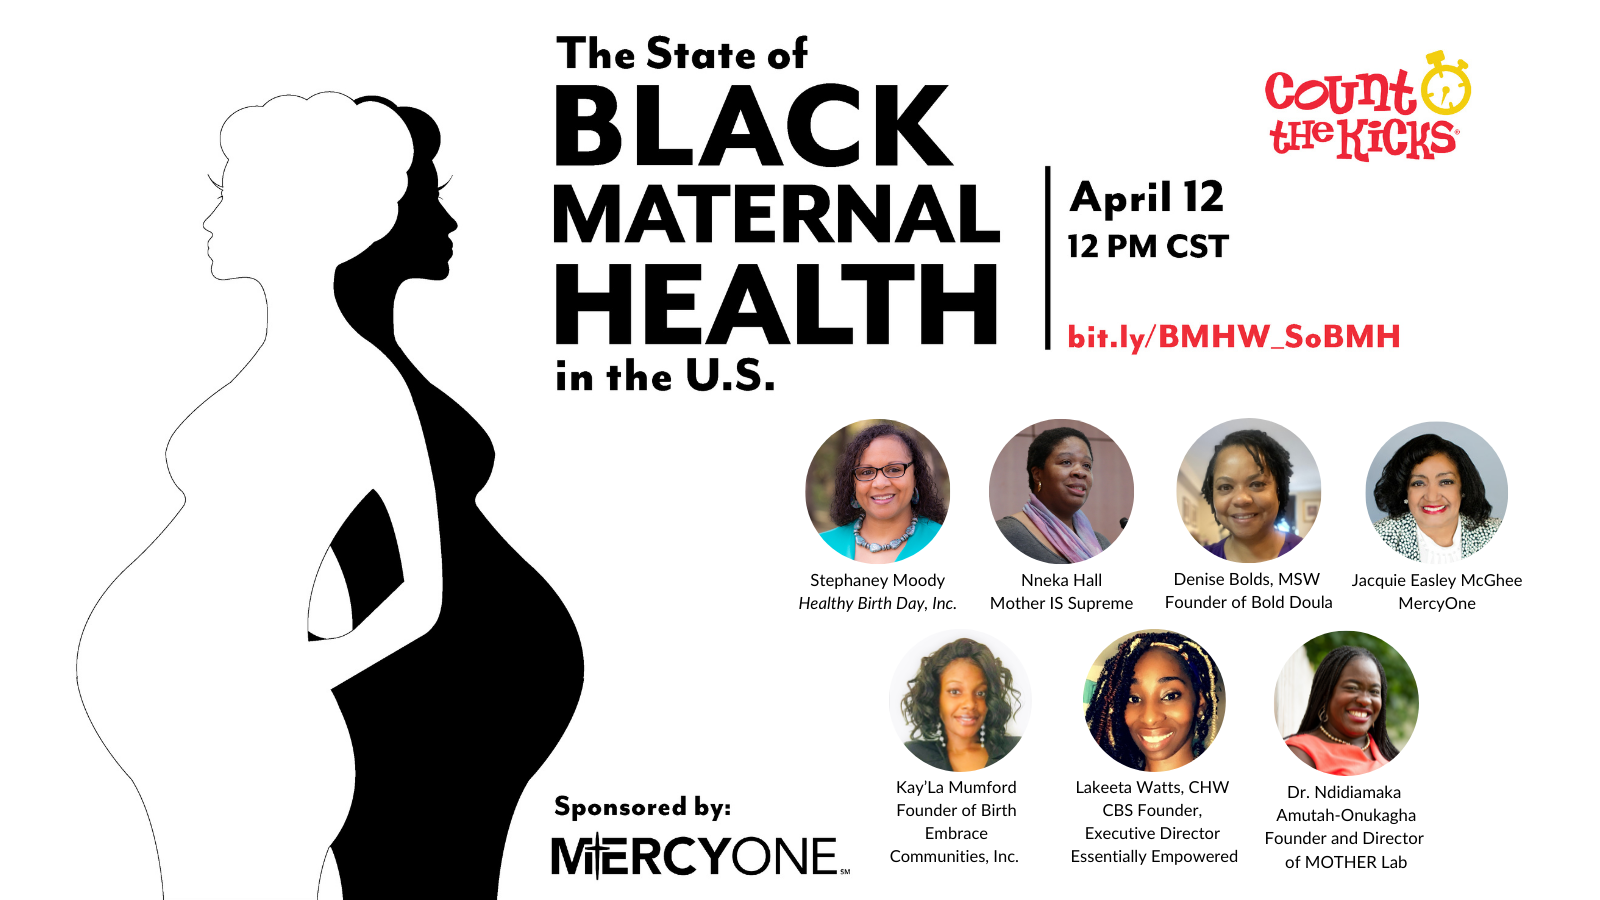 State of Black Maternal Health in the U.S. webinar